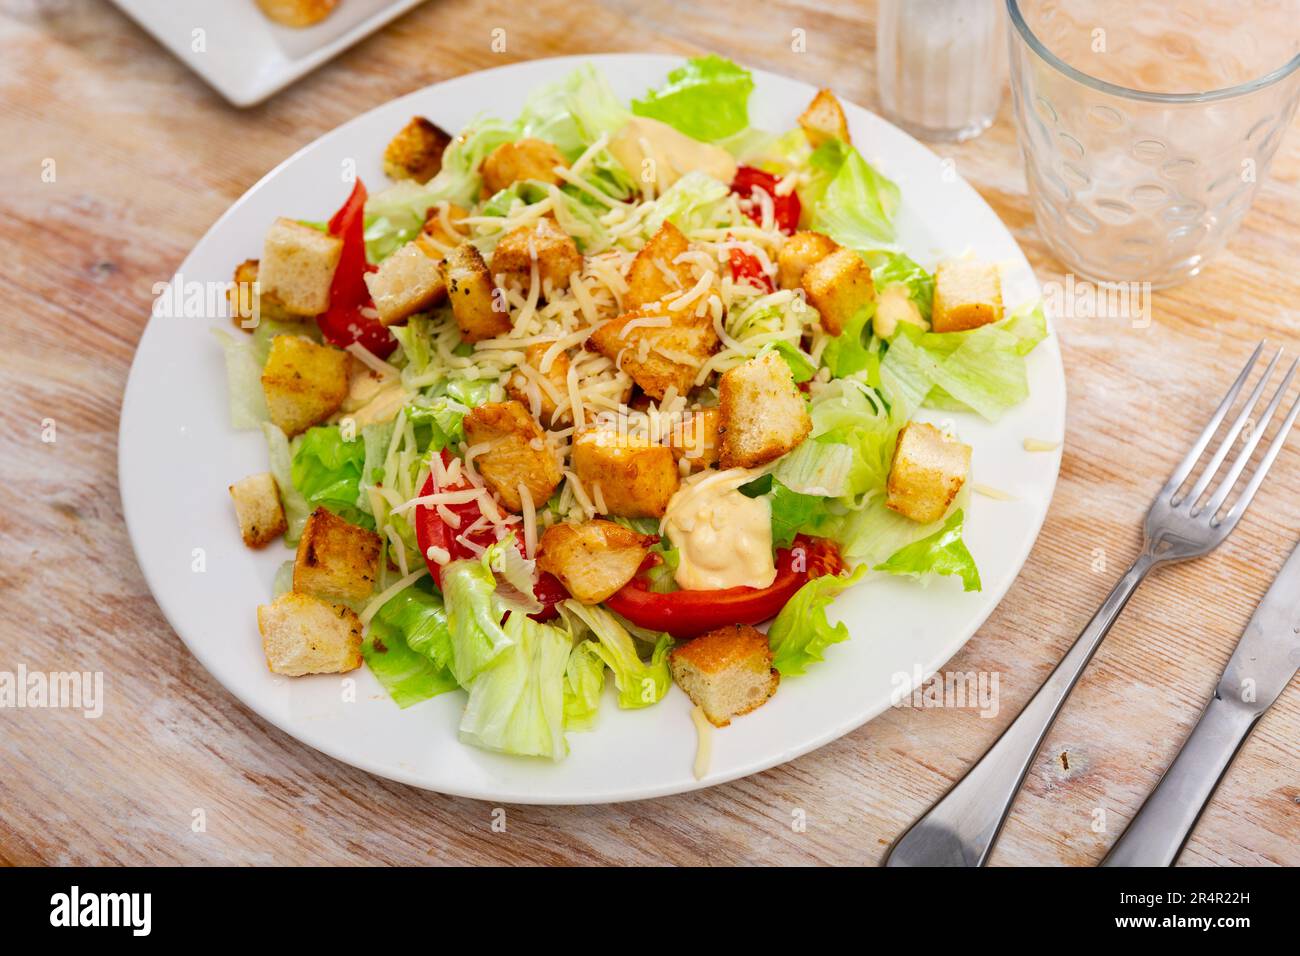 Popular dish of american cuisine is Caesar salad Stock Photo